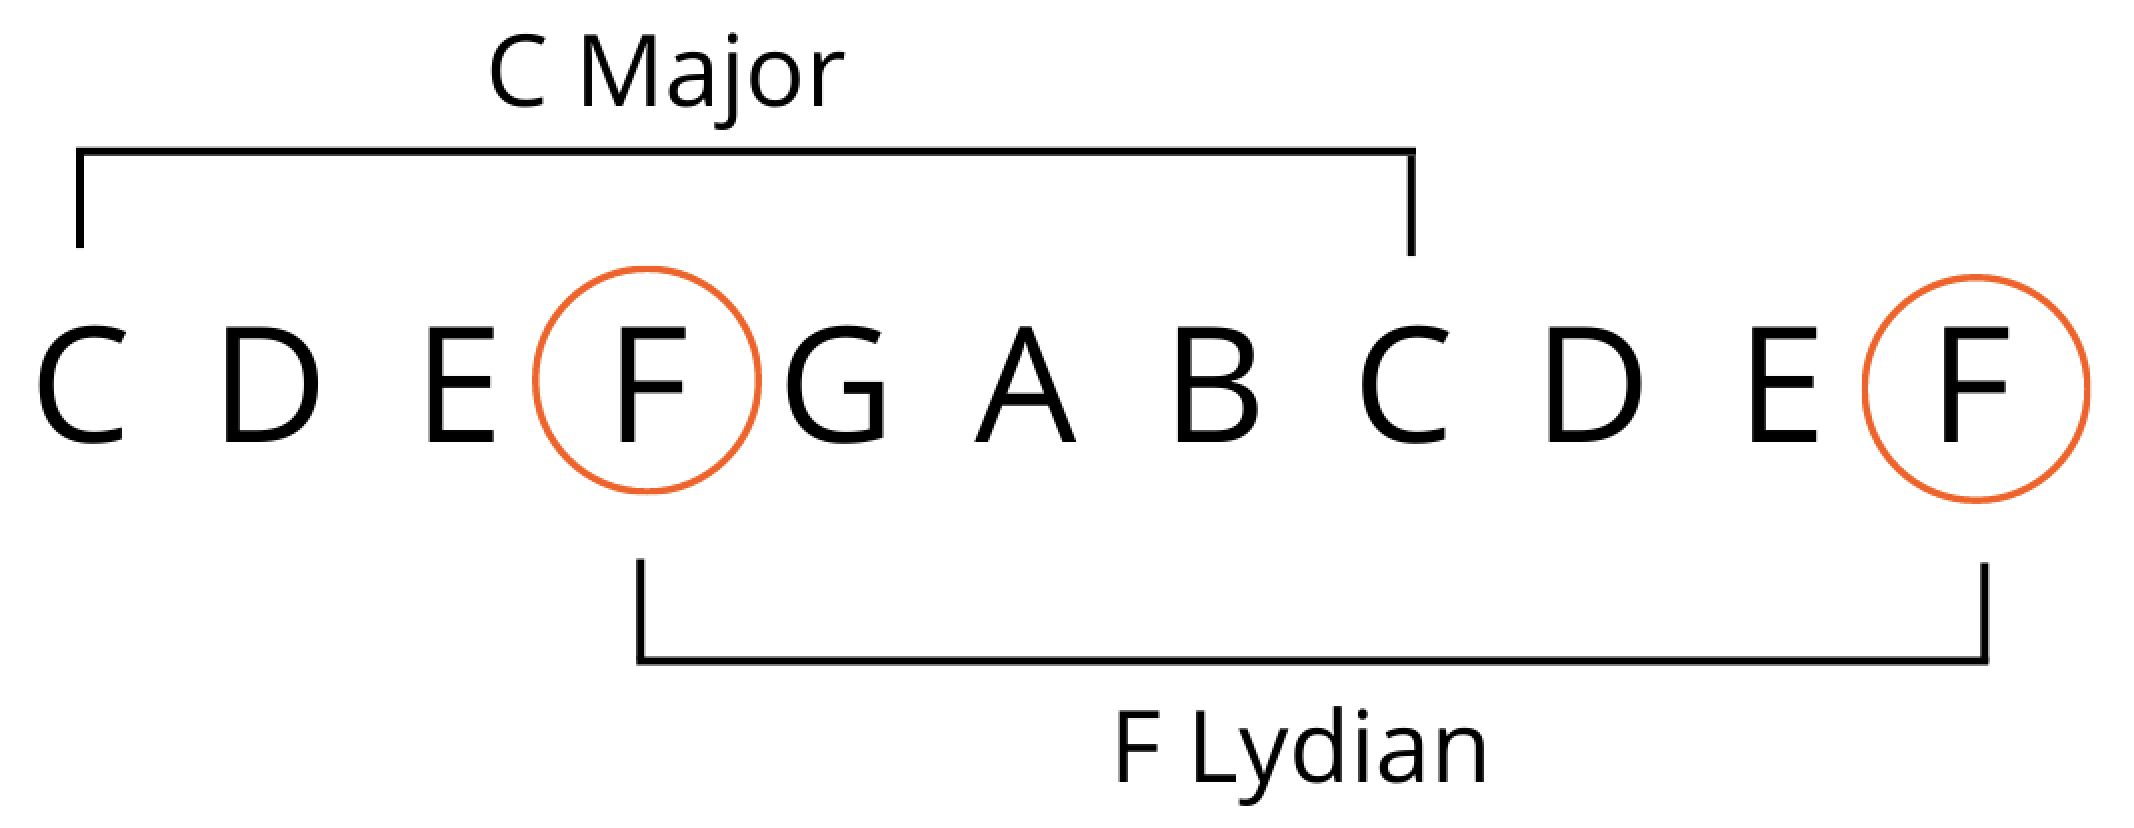 F Lydian Mode Guitar C Major Image